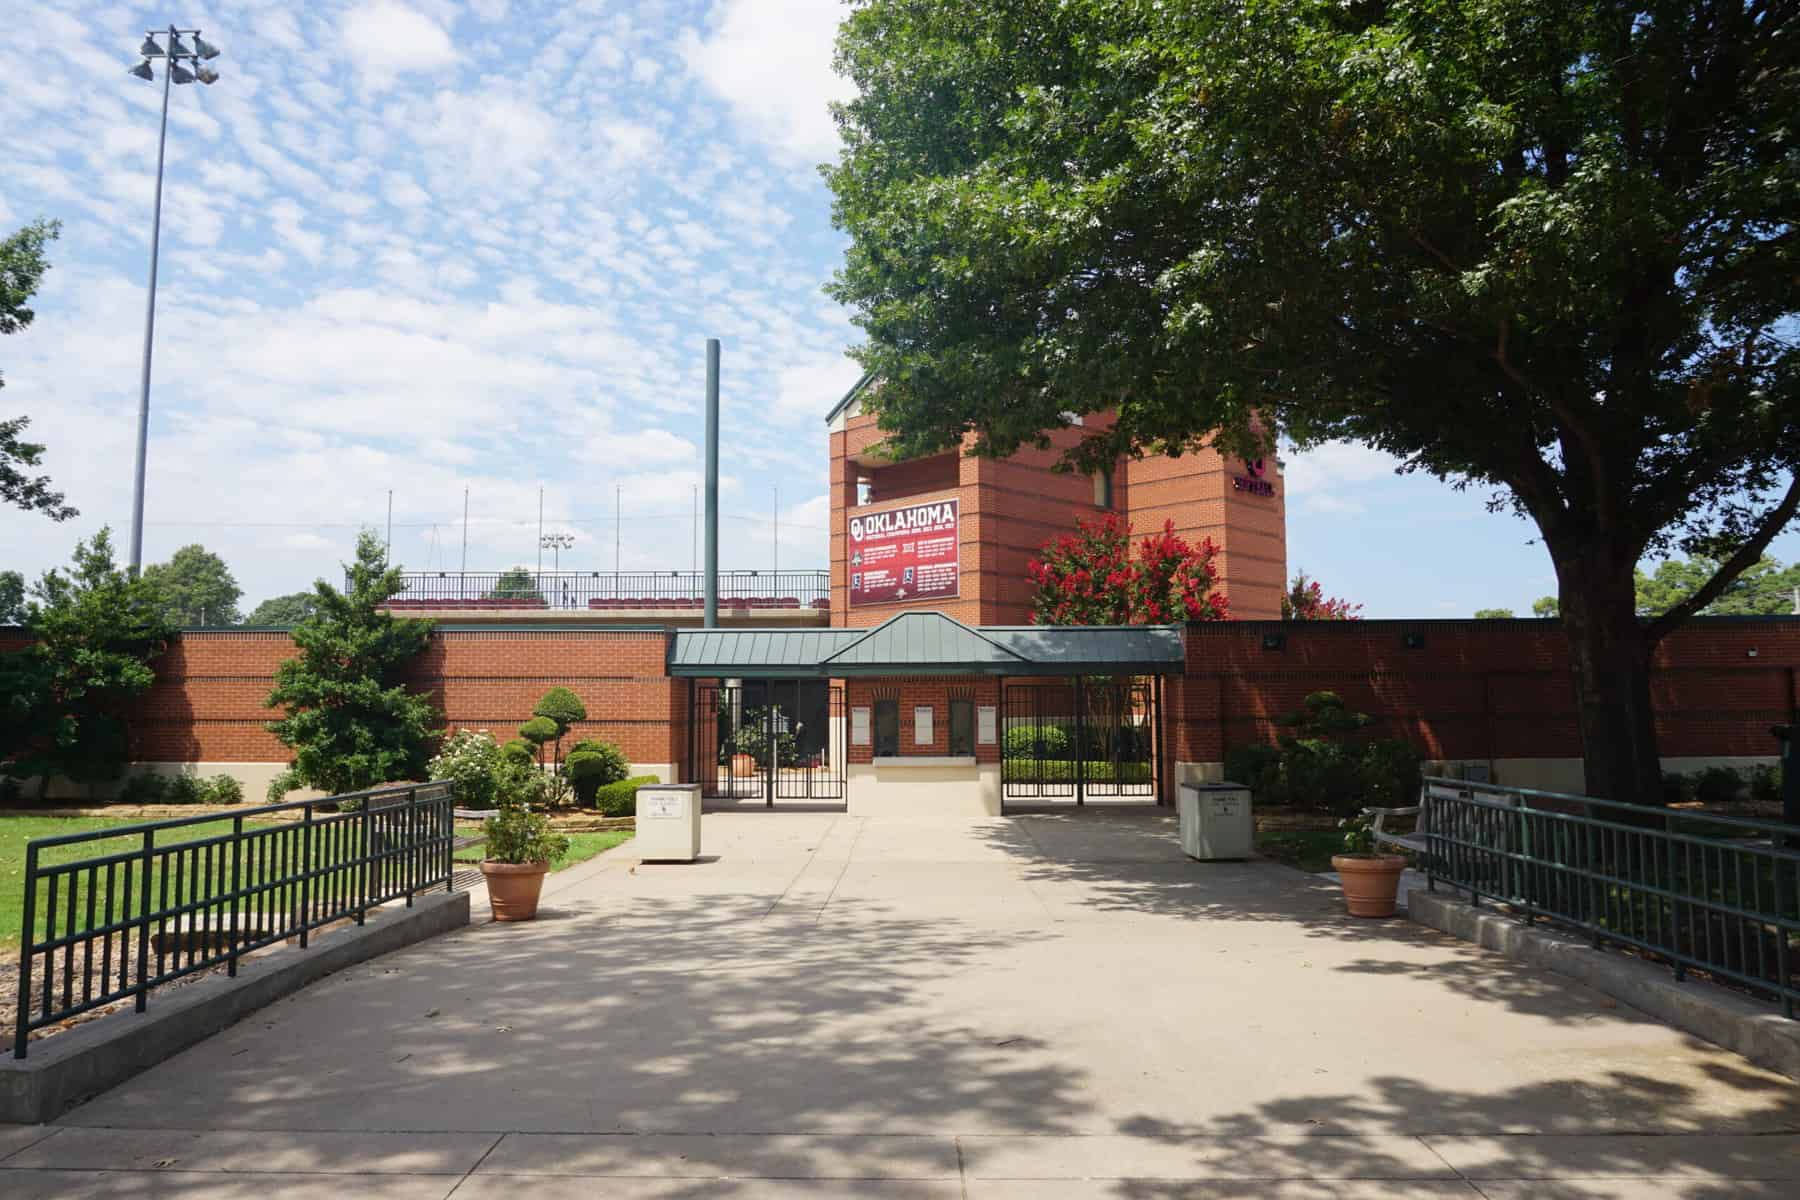 University of Oklahoma women's softball facility is shown fron the outside.